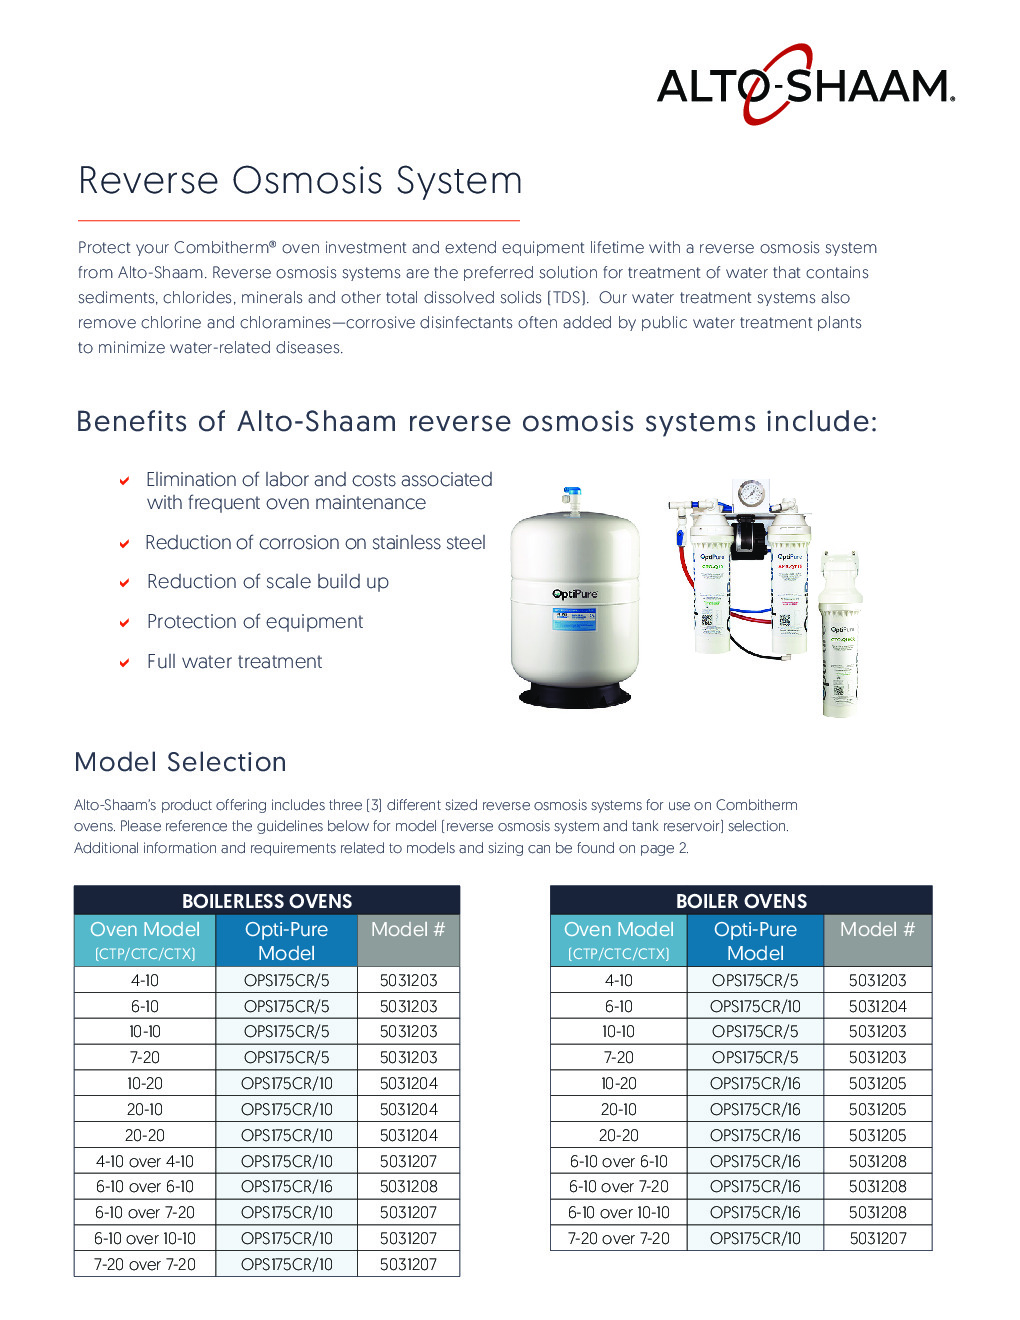 Alto-Shaam 5031205 Reverse Osmosis System